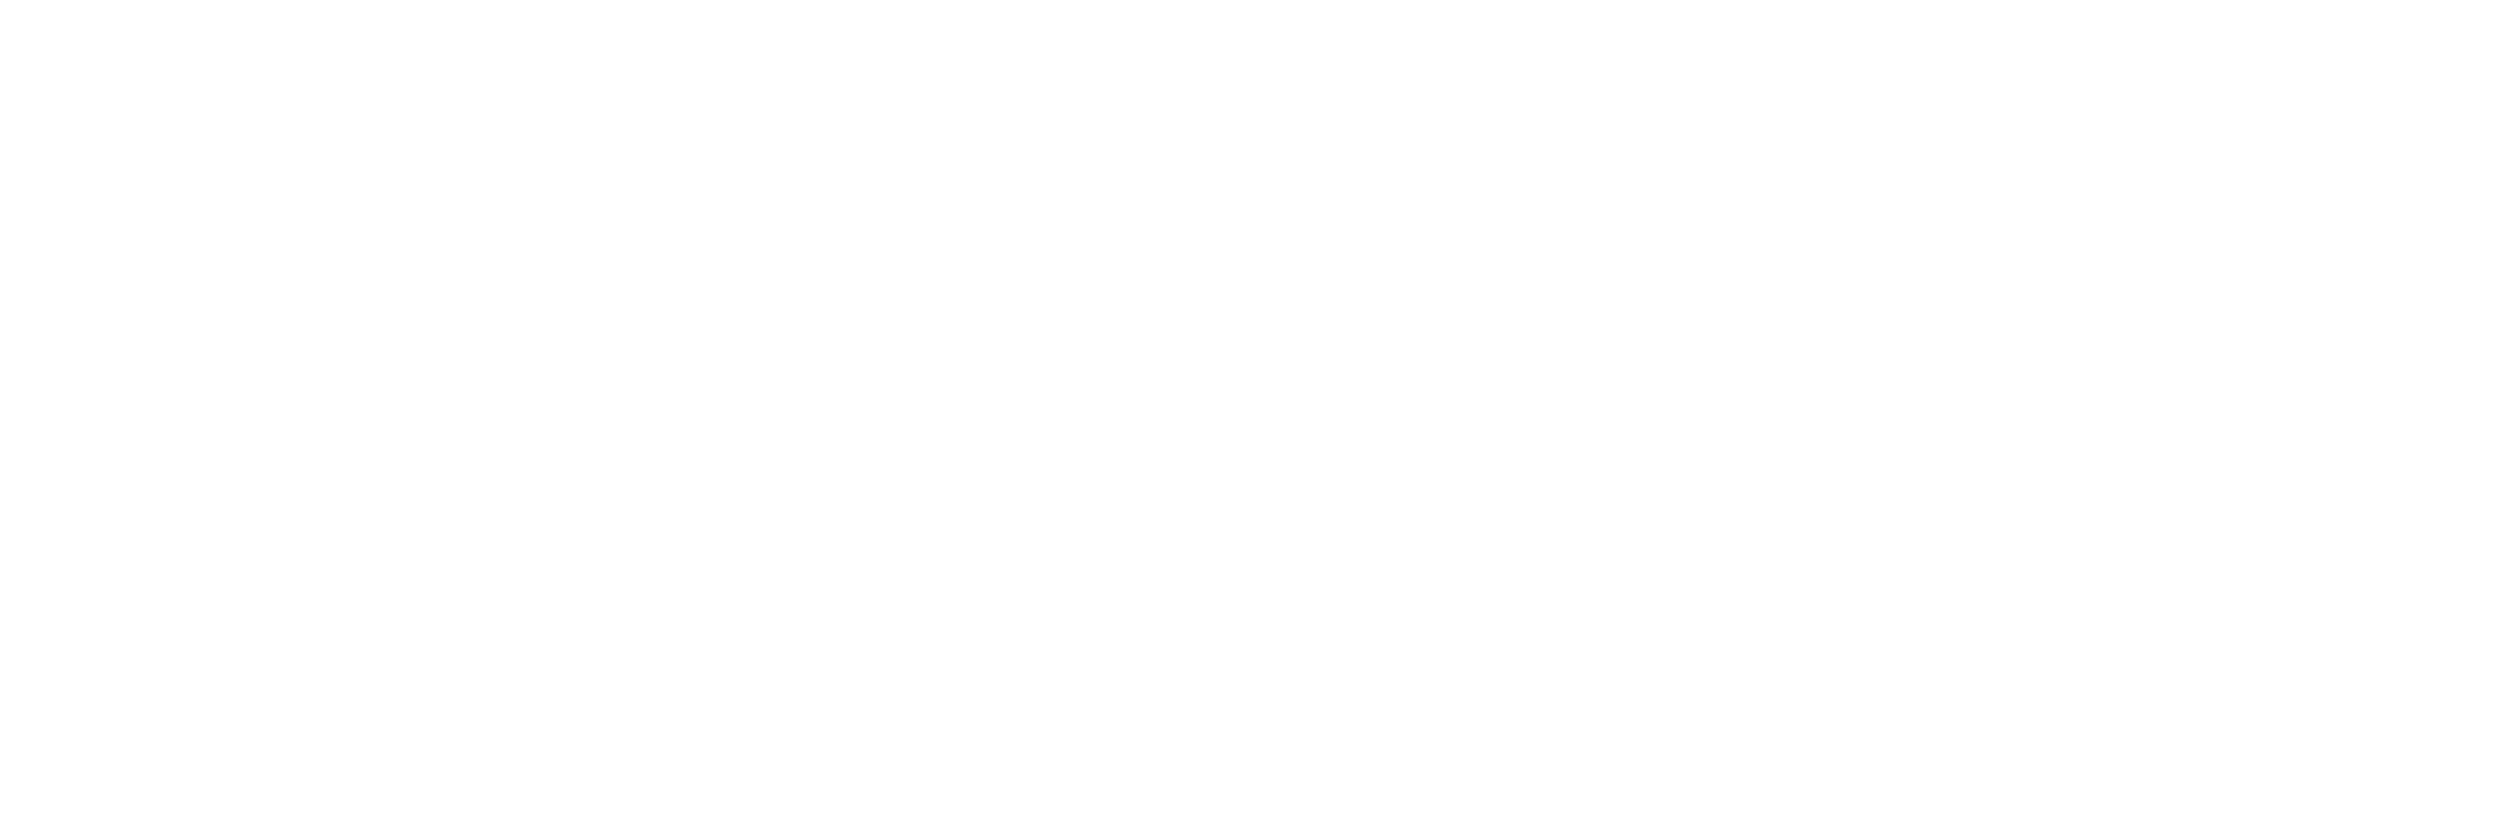 Cedar Ridge Veterinary